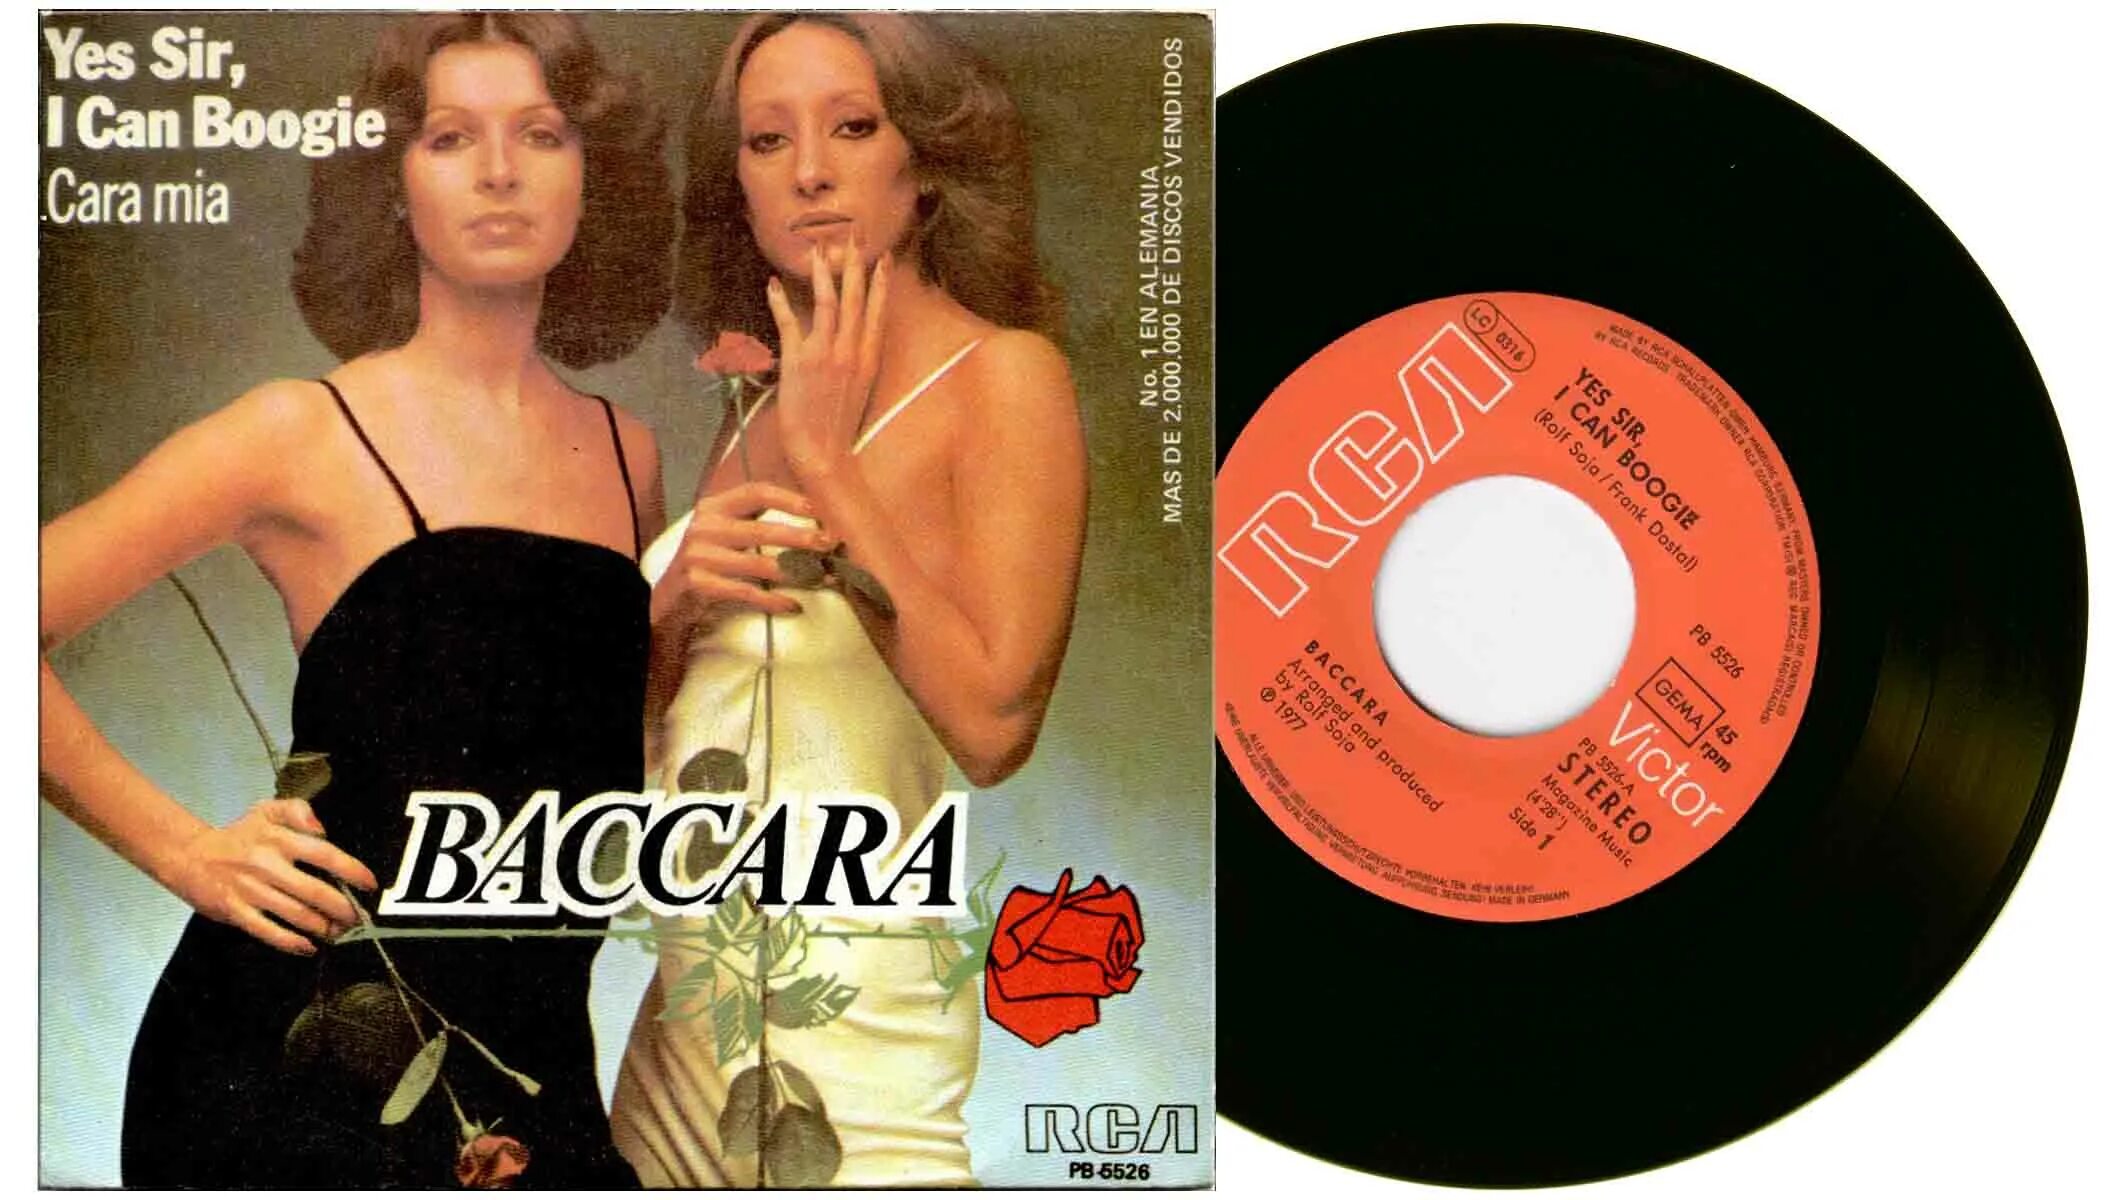 Baccara cara mia. Группа Baccara в молодости. Baccara Yes Sir обложка альбома. Baccara обложки альбомов. Альбом Baccara cara Mia.